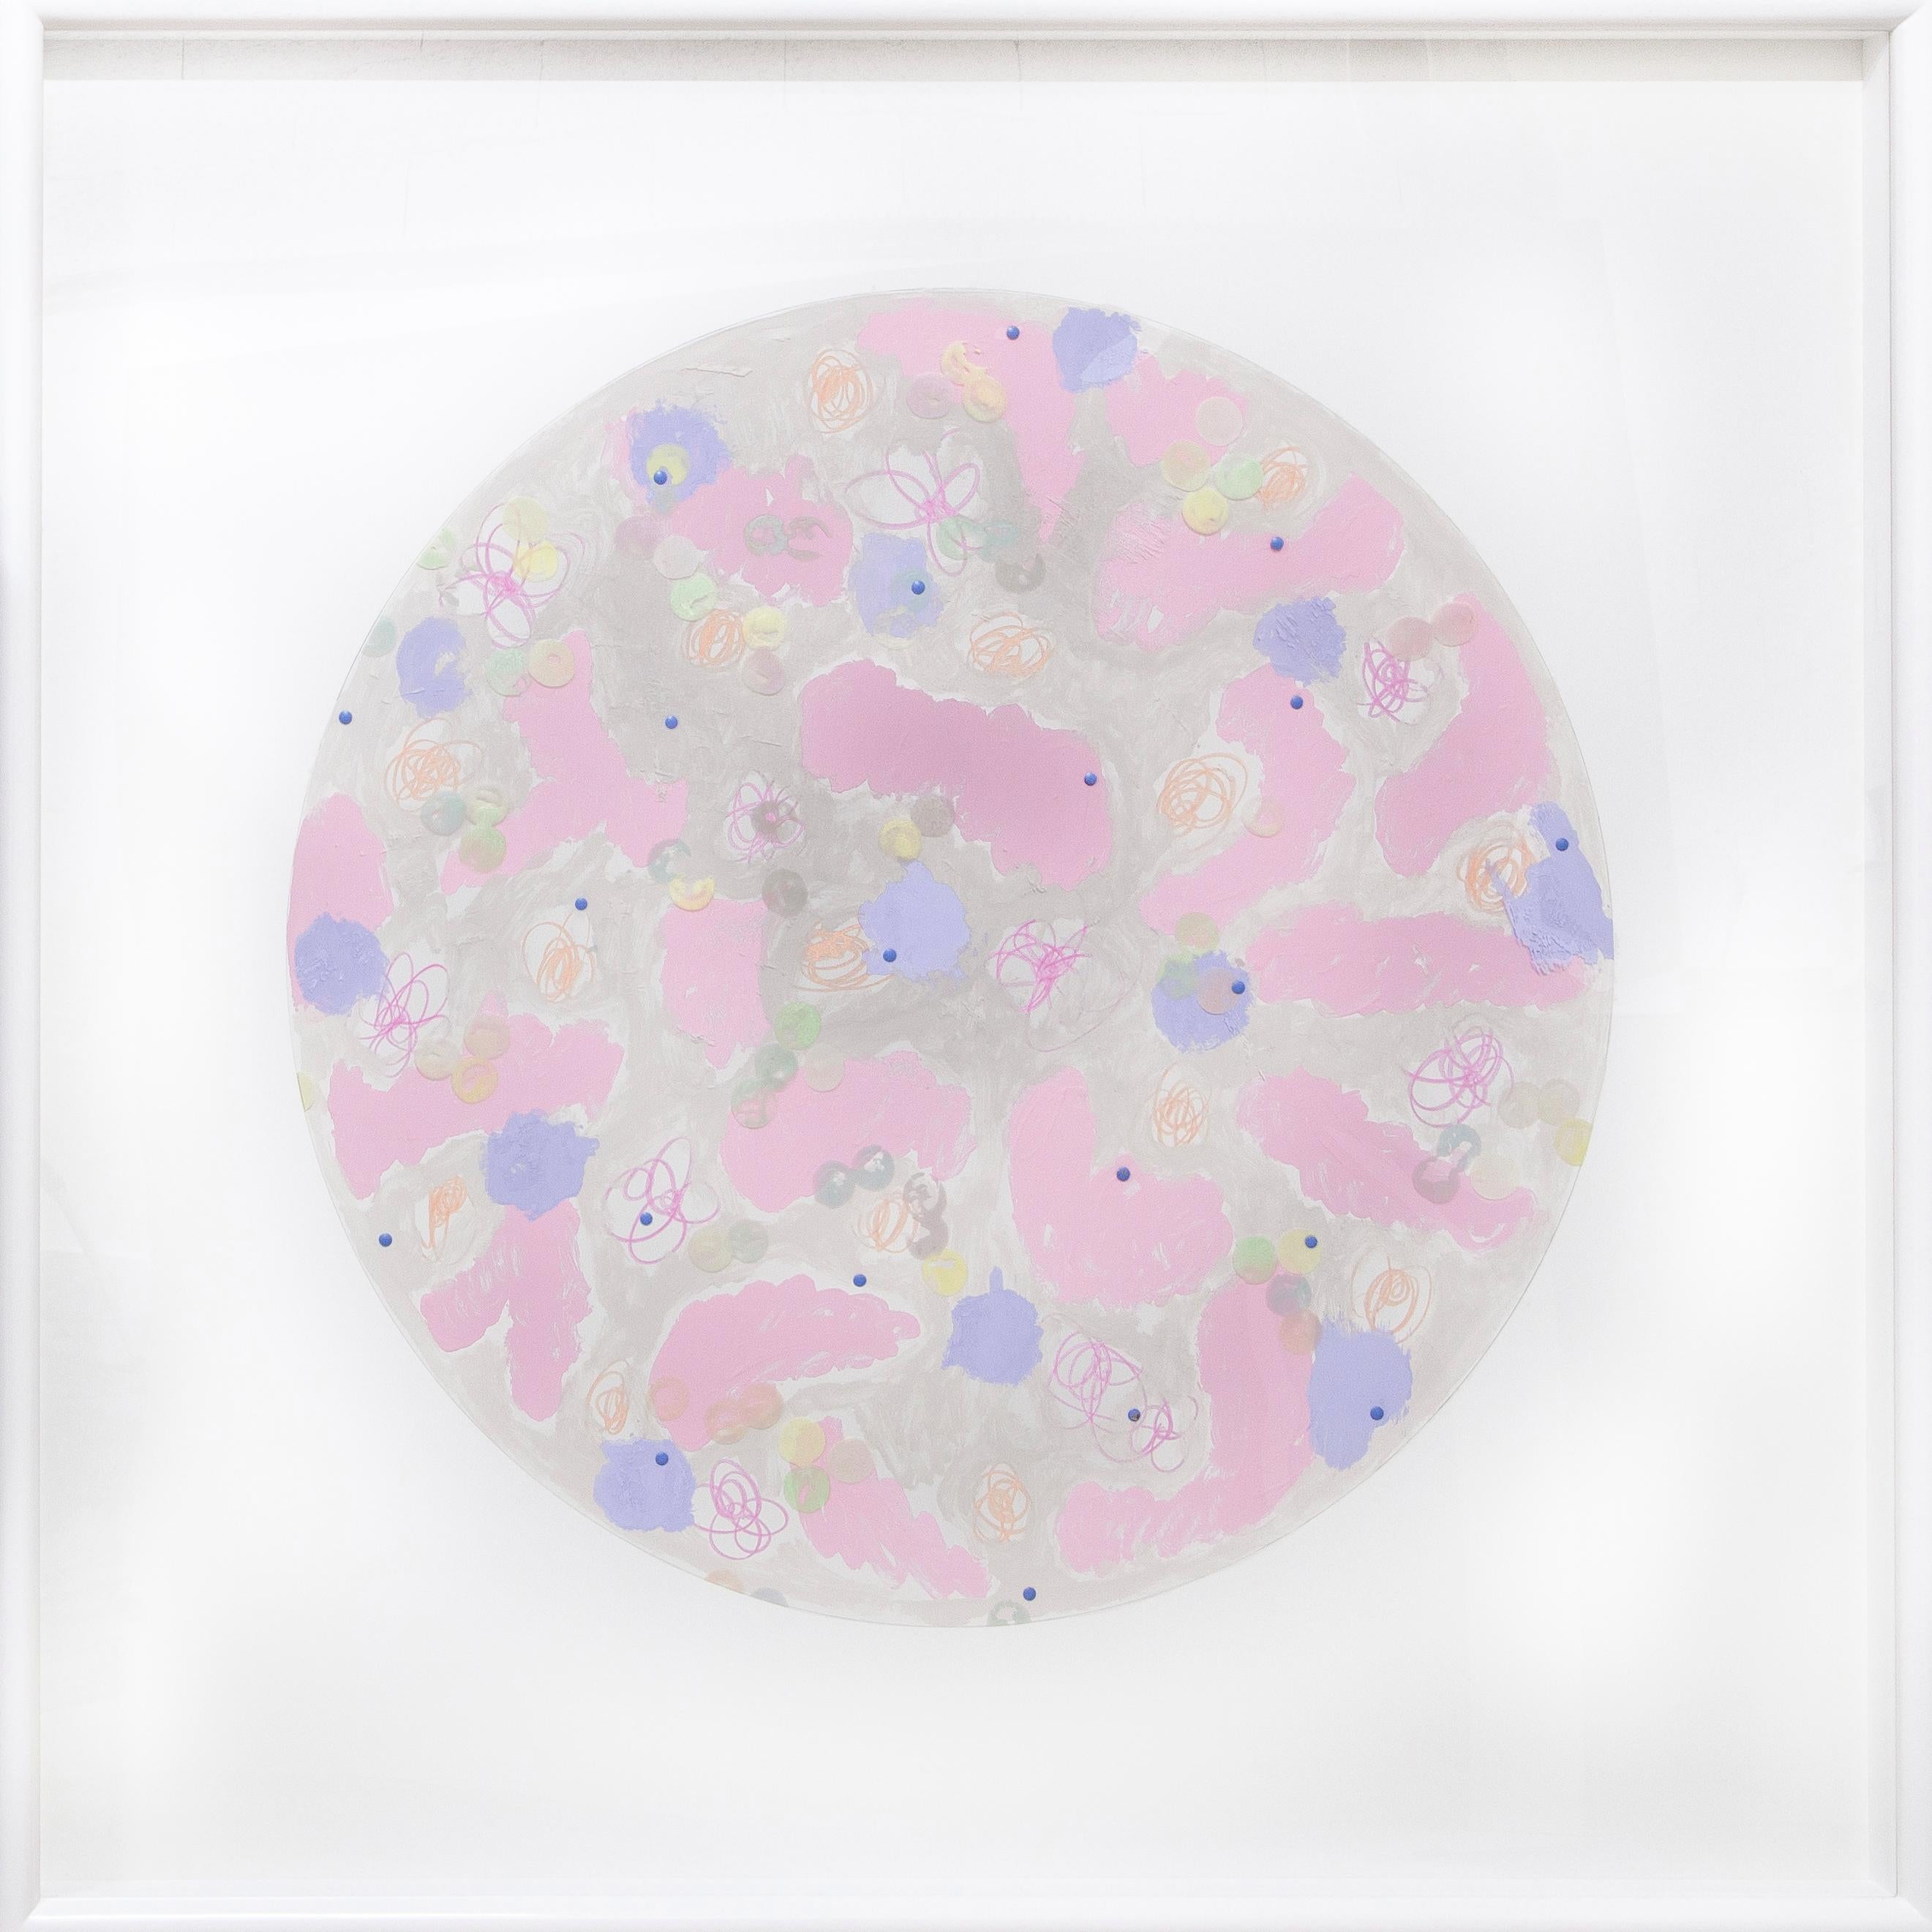 Semilleros I in Grey, Purple & Pink - Mixed Media Art by Daniel Orson Ybarra